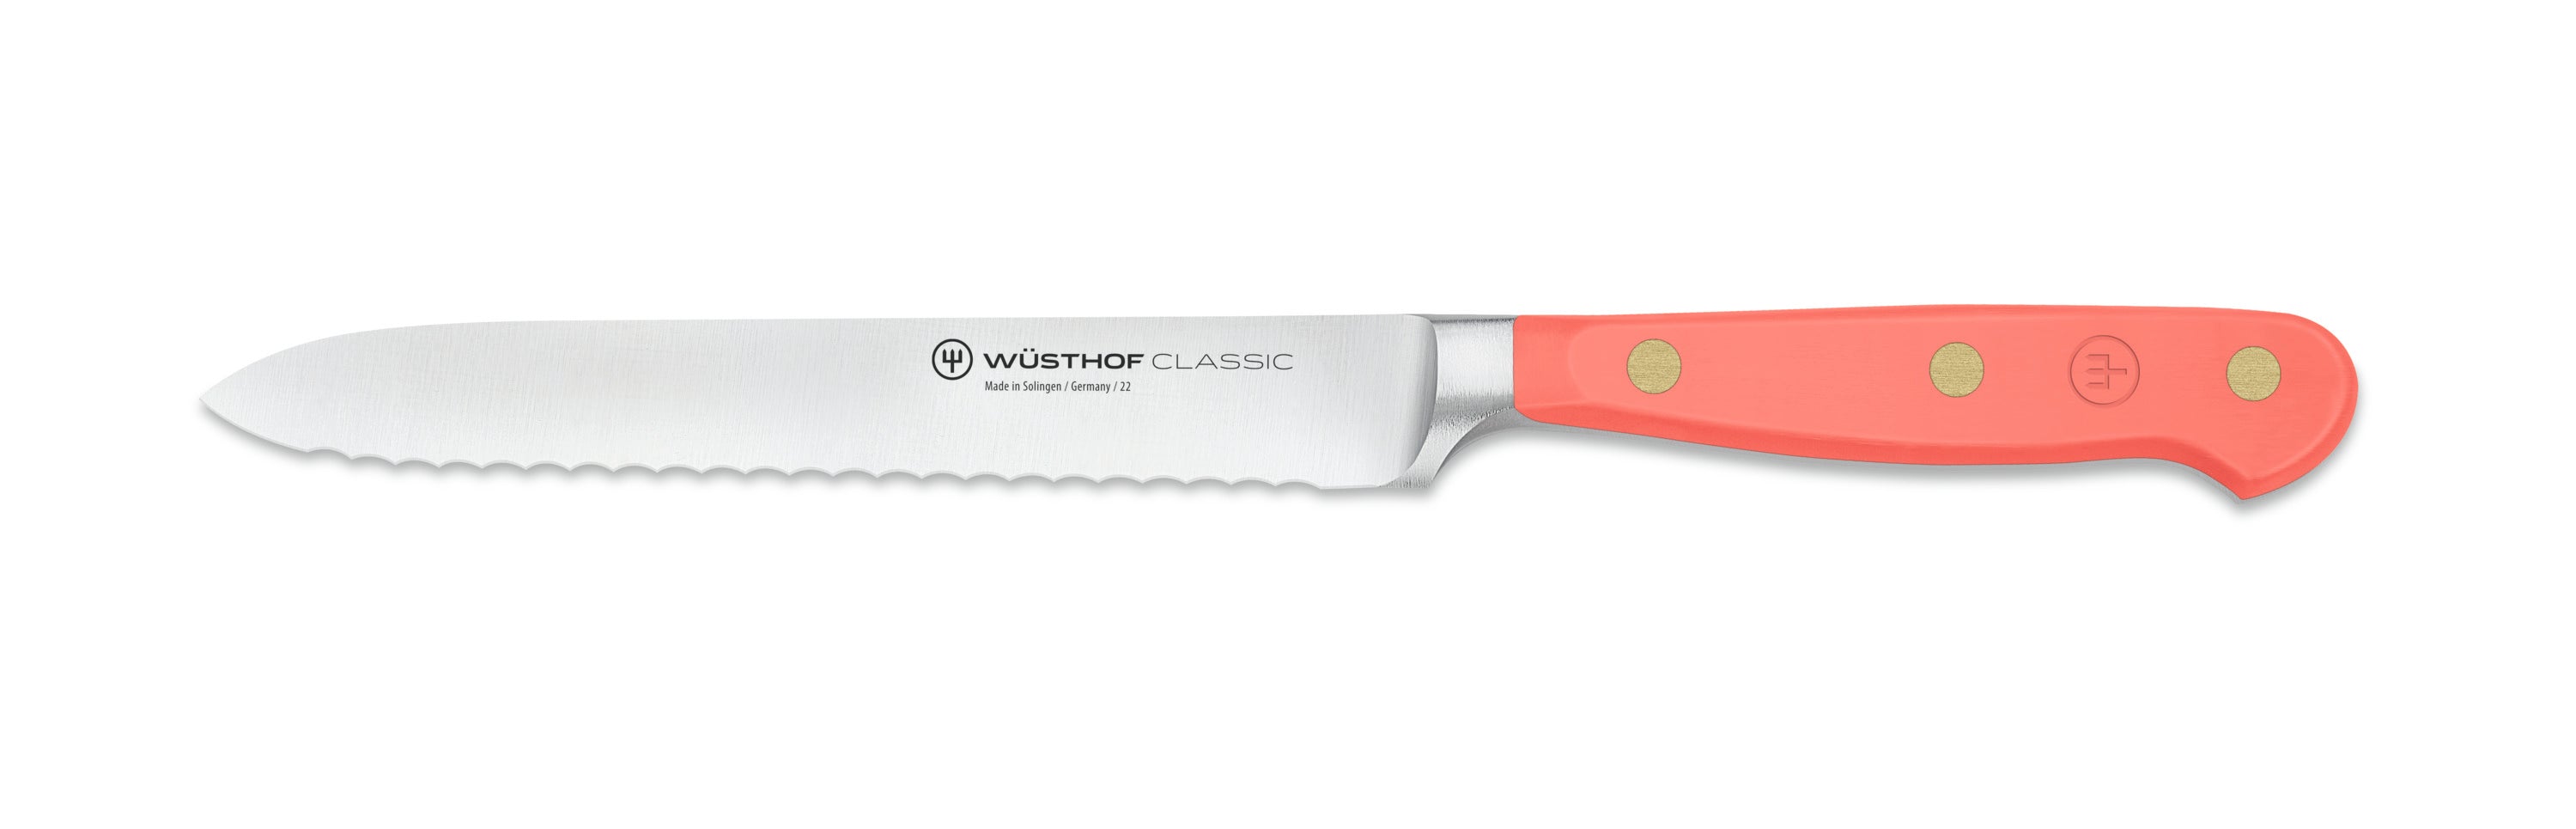 Wusthof Classic Colour Coral Peach Serrated Utility Knife 14cm 1061708314W